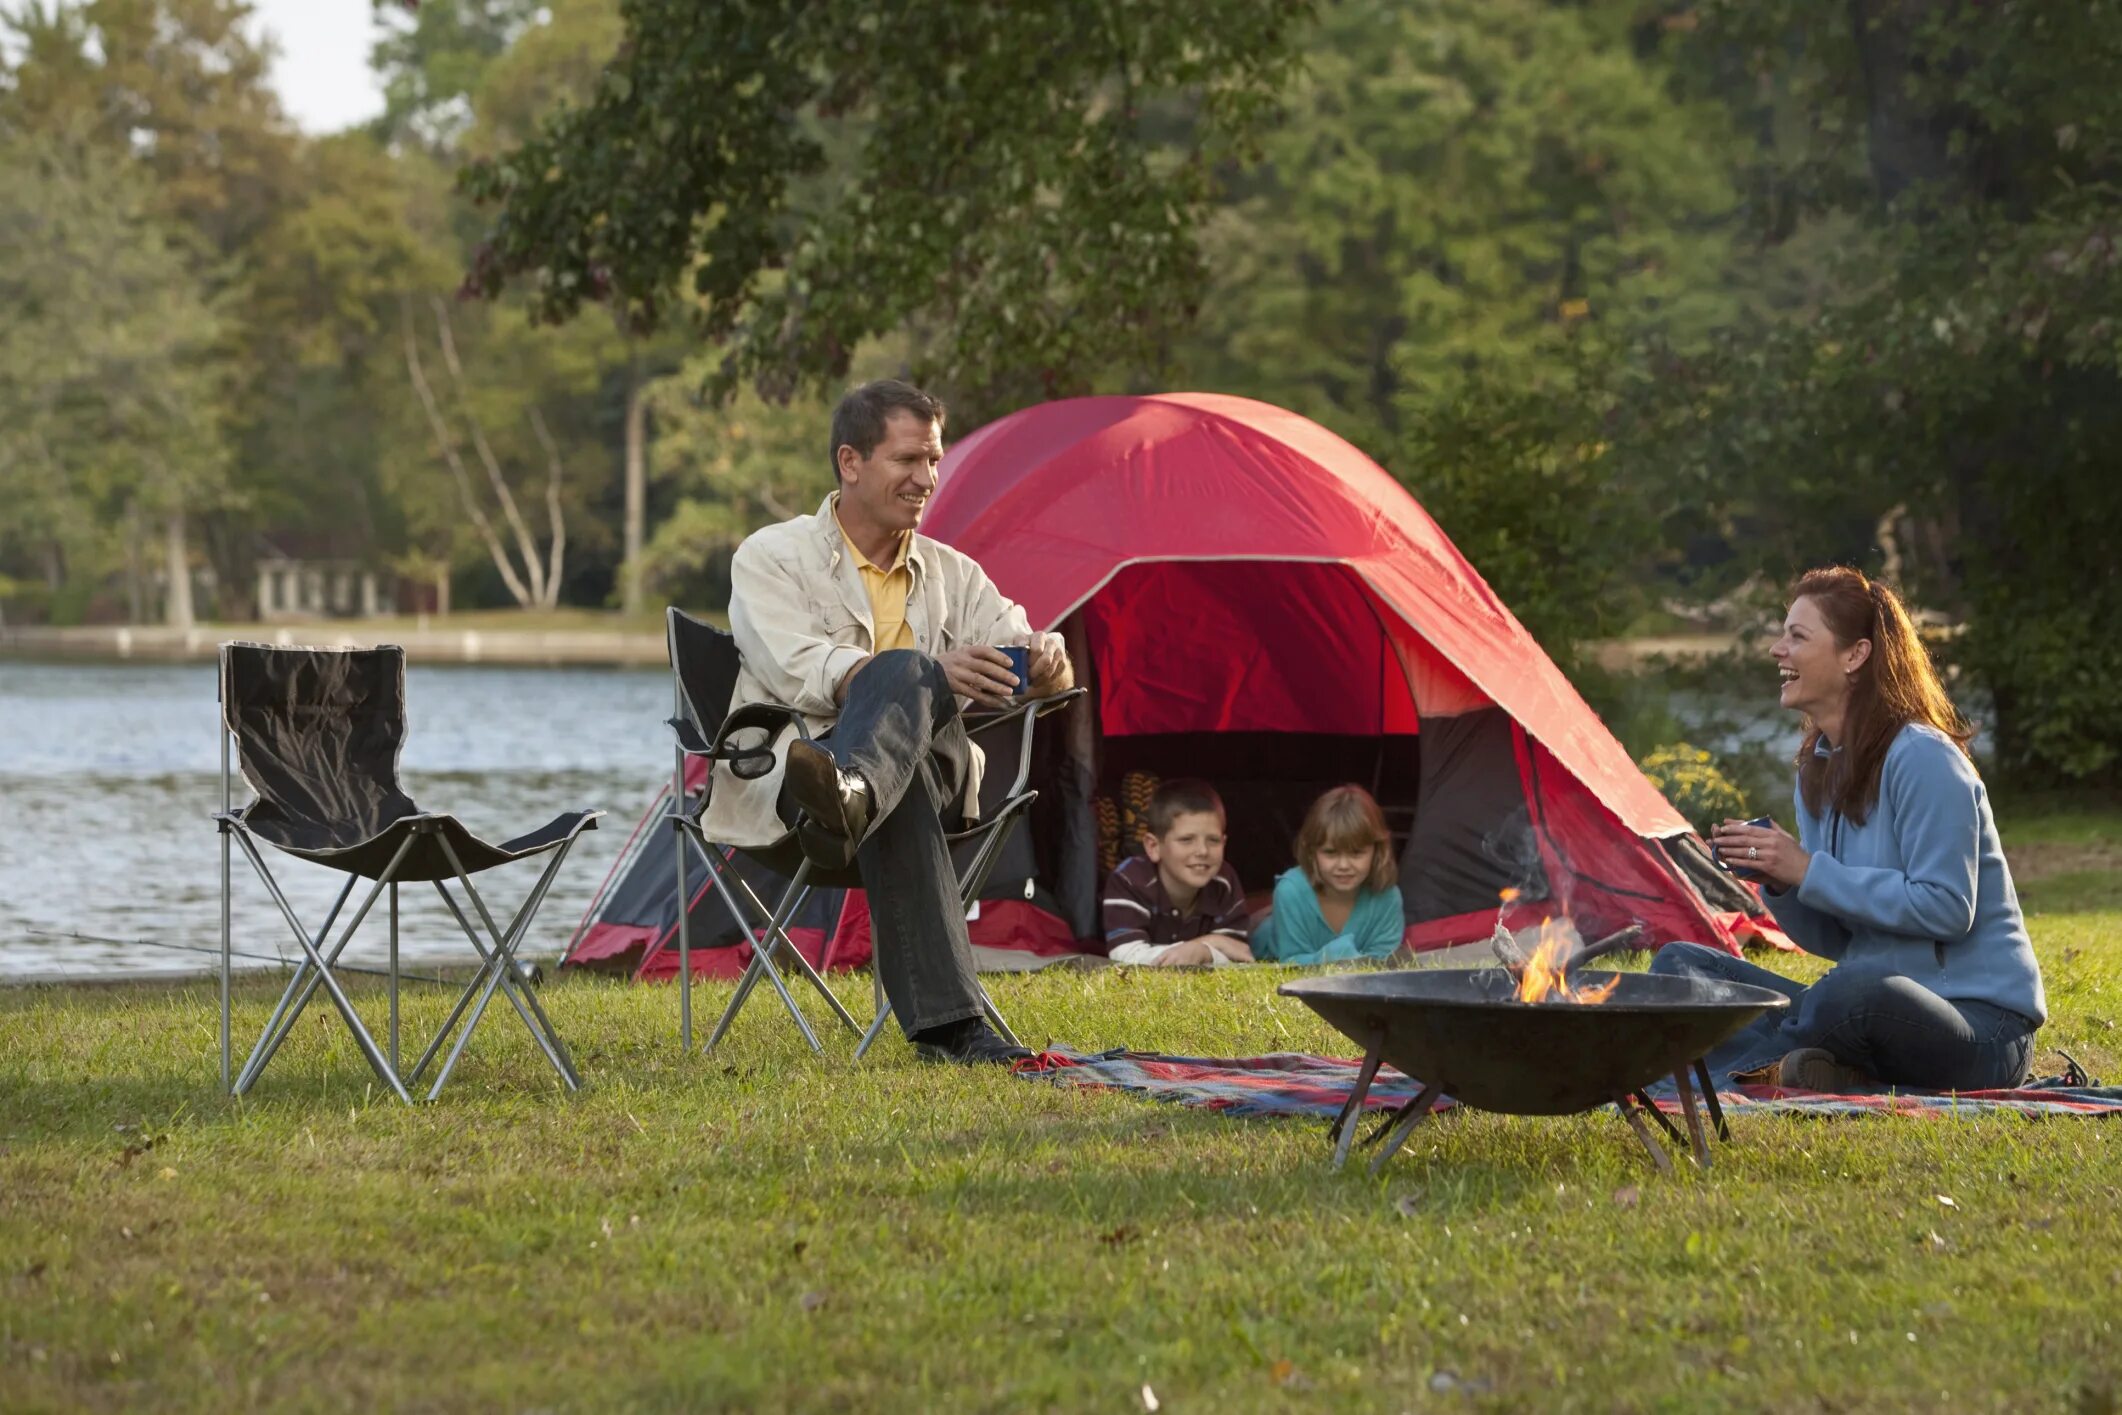 Палатка на природе. Отдыхаем на природе. Пикник с семьей на природе. Пикник на природе с палатками. Включи camping